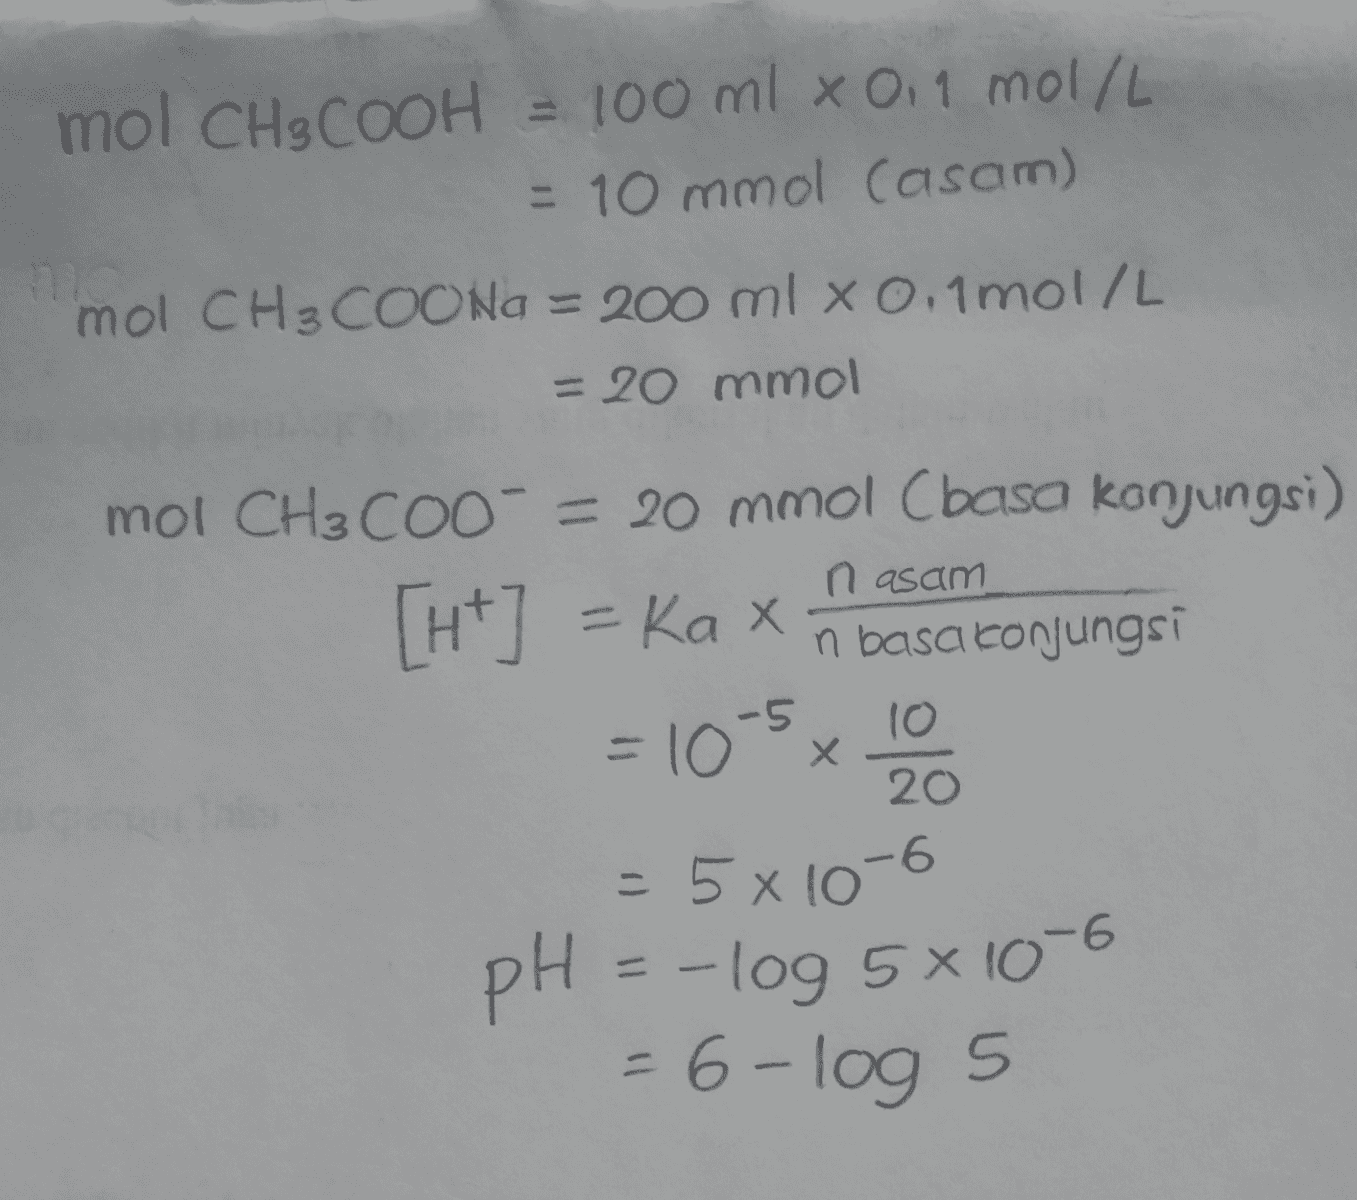 mol CH3COOH = 100 ml x 0. 1 mol/L = 10 mmol Casam) mol CH3COONa = 200 ml x 0,1 mol/L = 20 mmol mol CH3COO- = 20 mmol Cbasa konjungsi) [++] = Kax n basa konjungsi n asam -5 = 10 x 10 20 = 5 x 10-6 pH = -log 5 x 10-6 = 6-log 5 